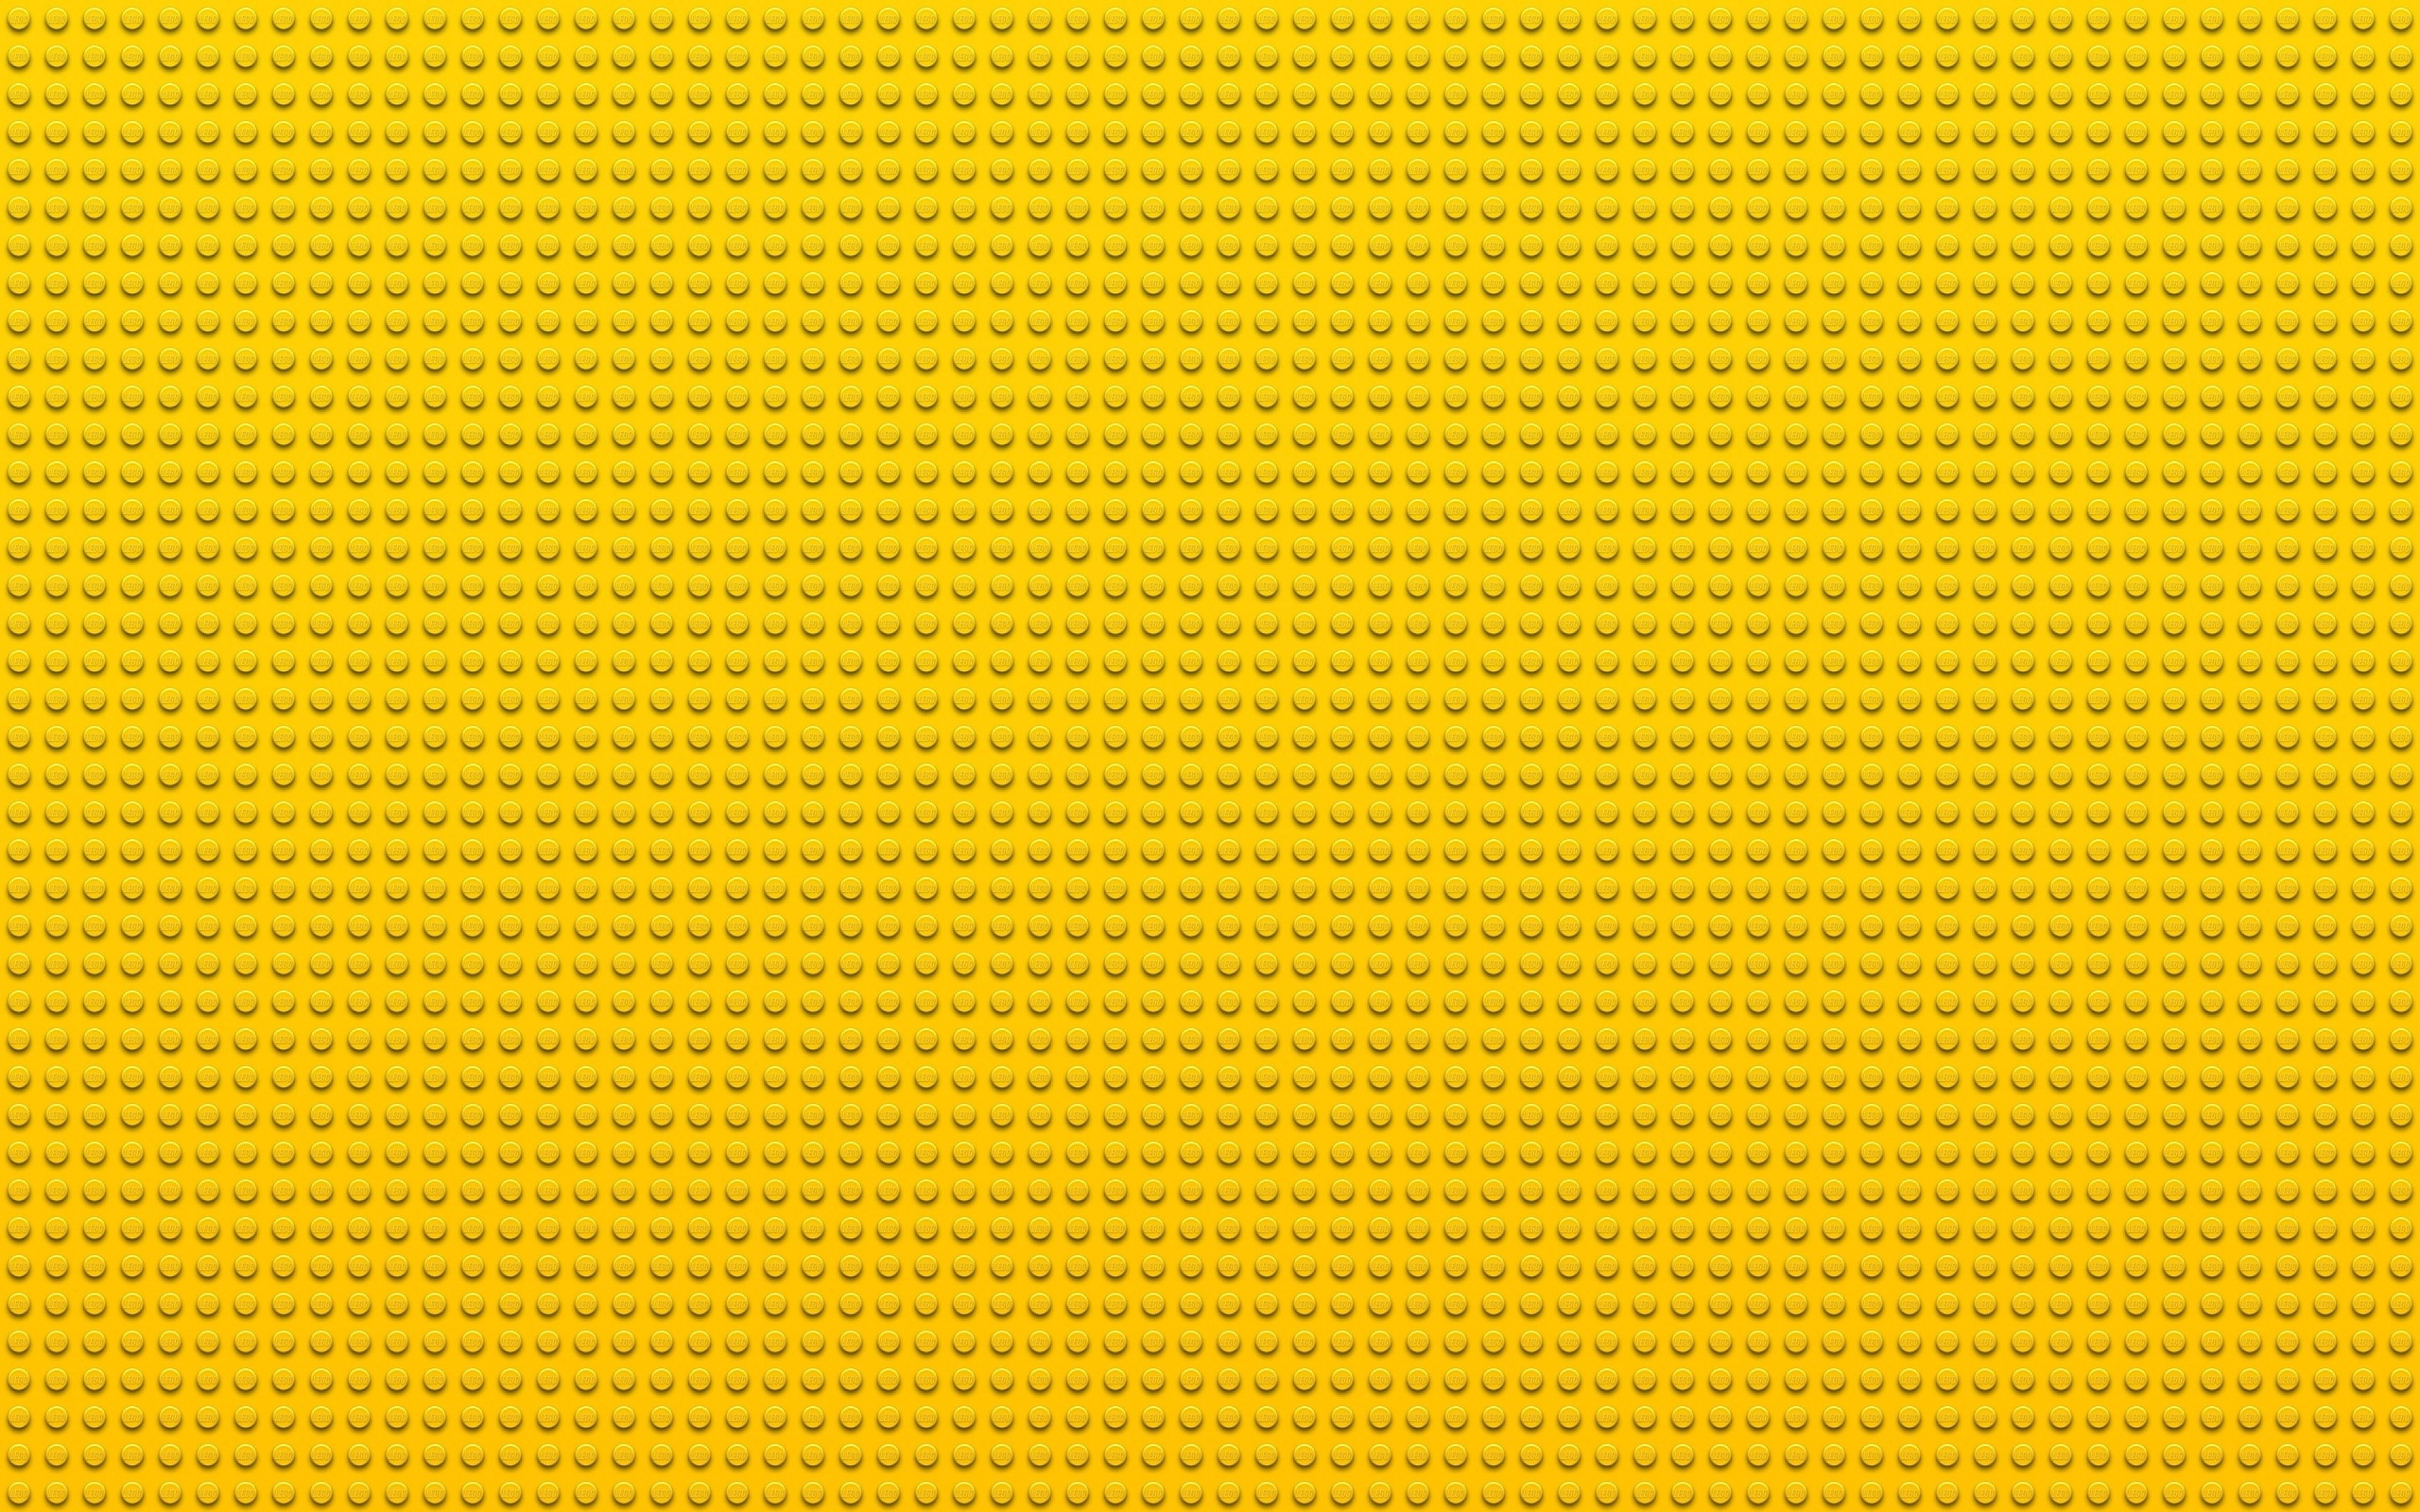 4K LEGO Wallpaper Free 4K LEGO Background